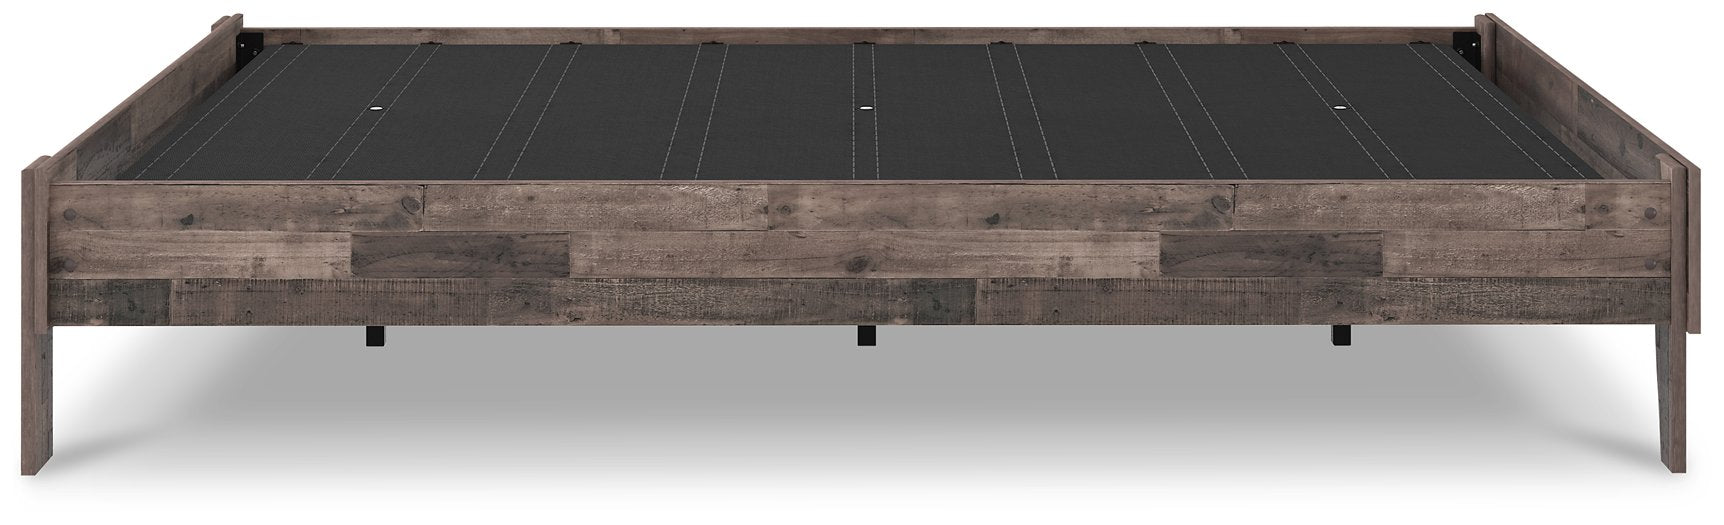 Neilsville Panel Bed - The Warehouse Mattresses, Furniture, & More (West Jordan,UT)